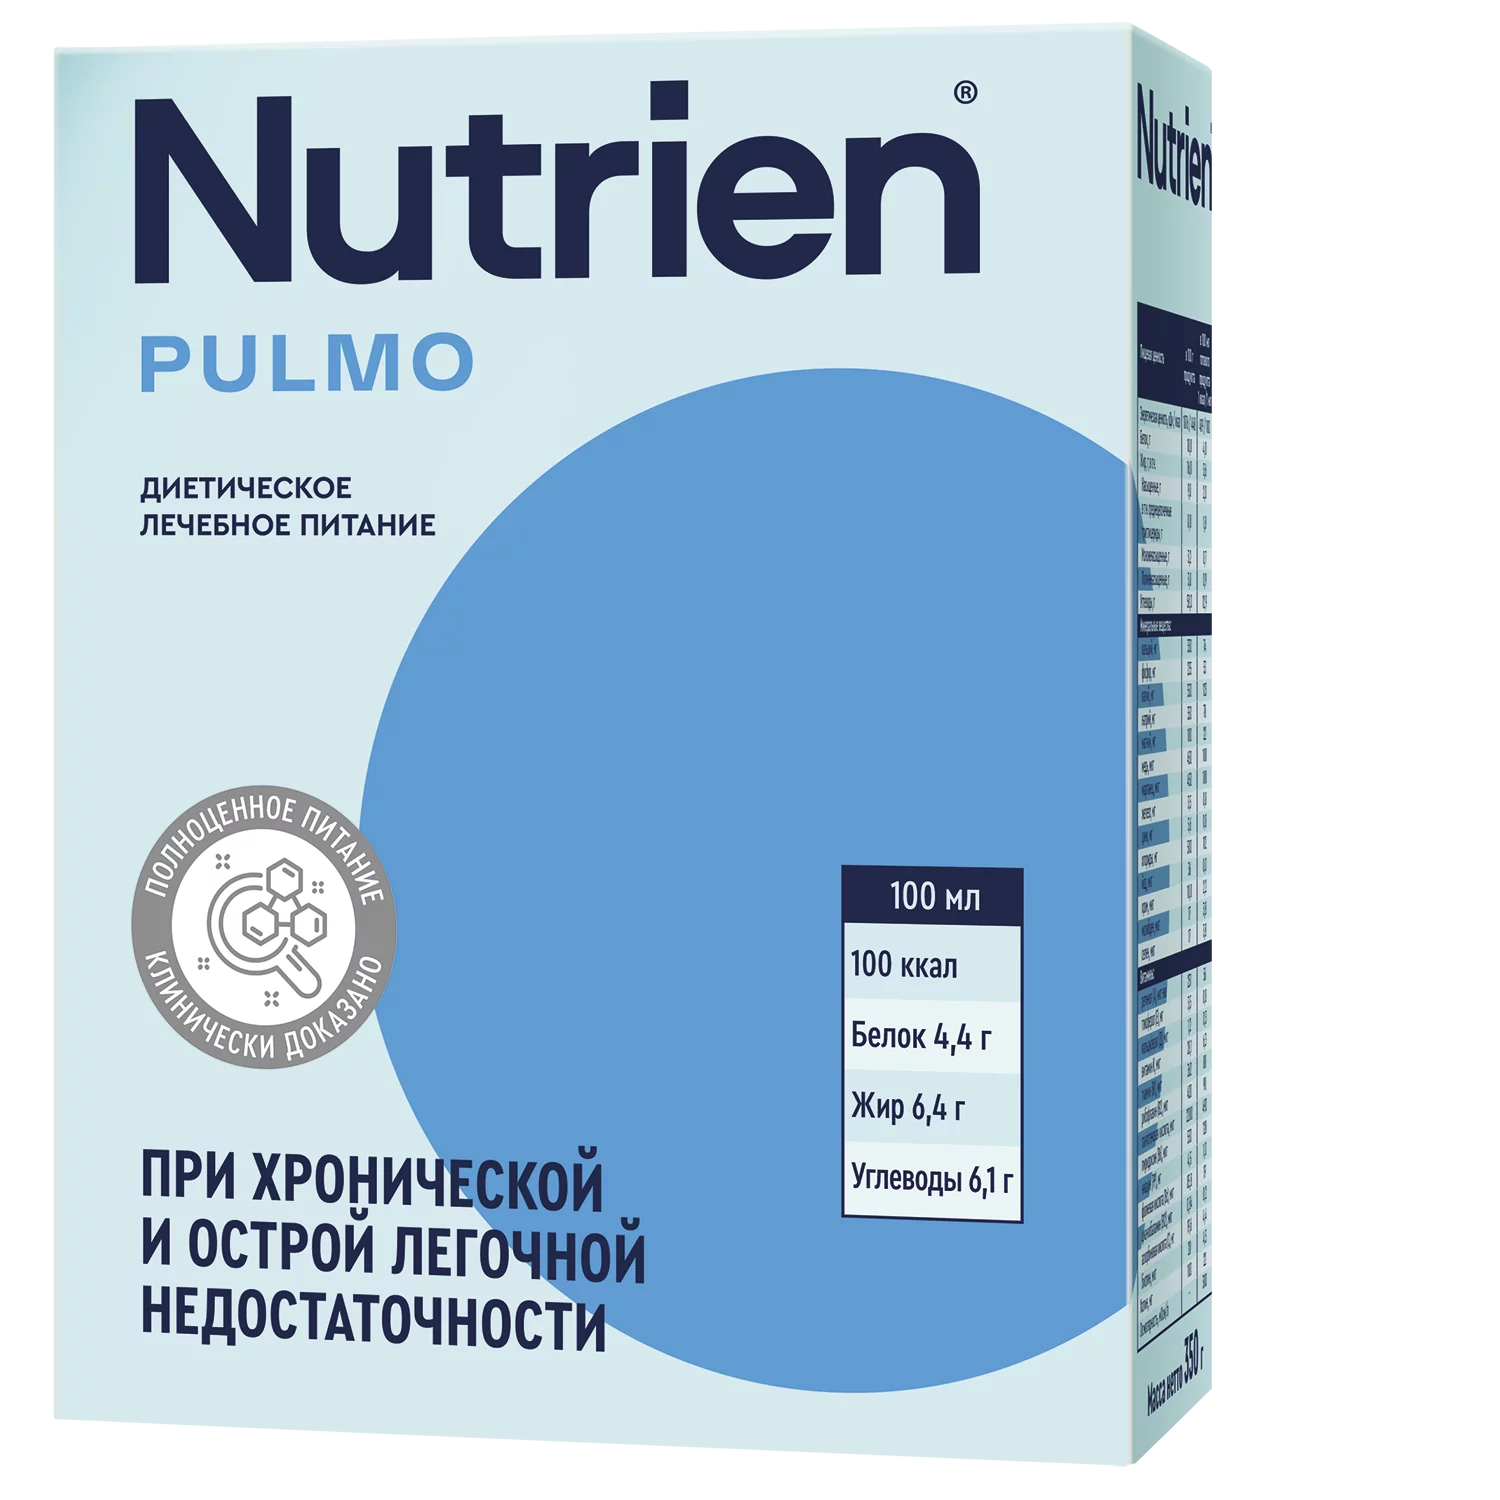 Nutrien Pulmo